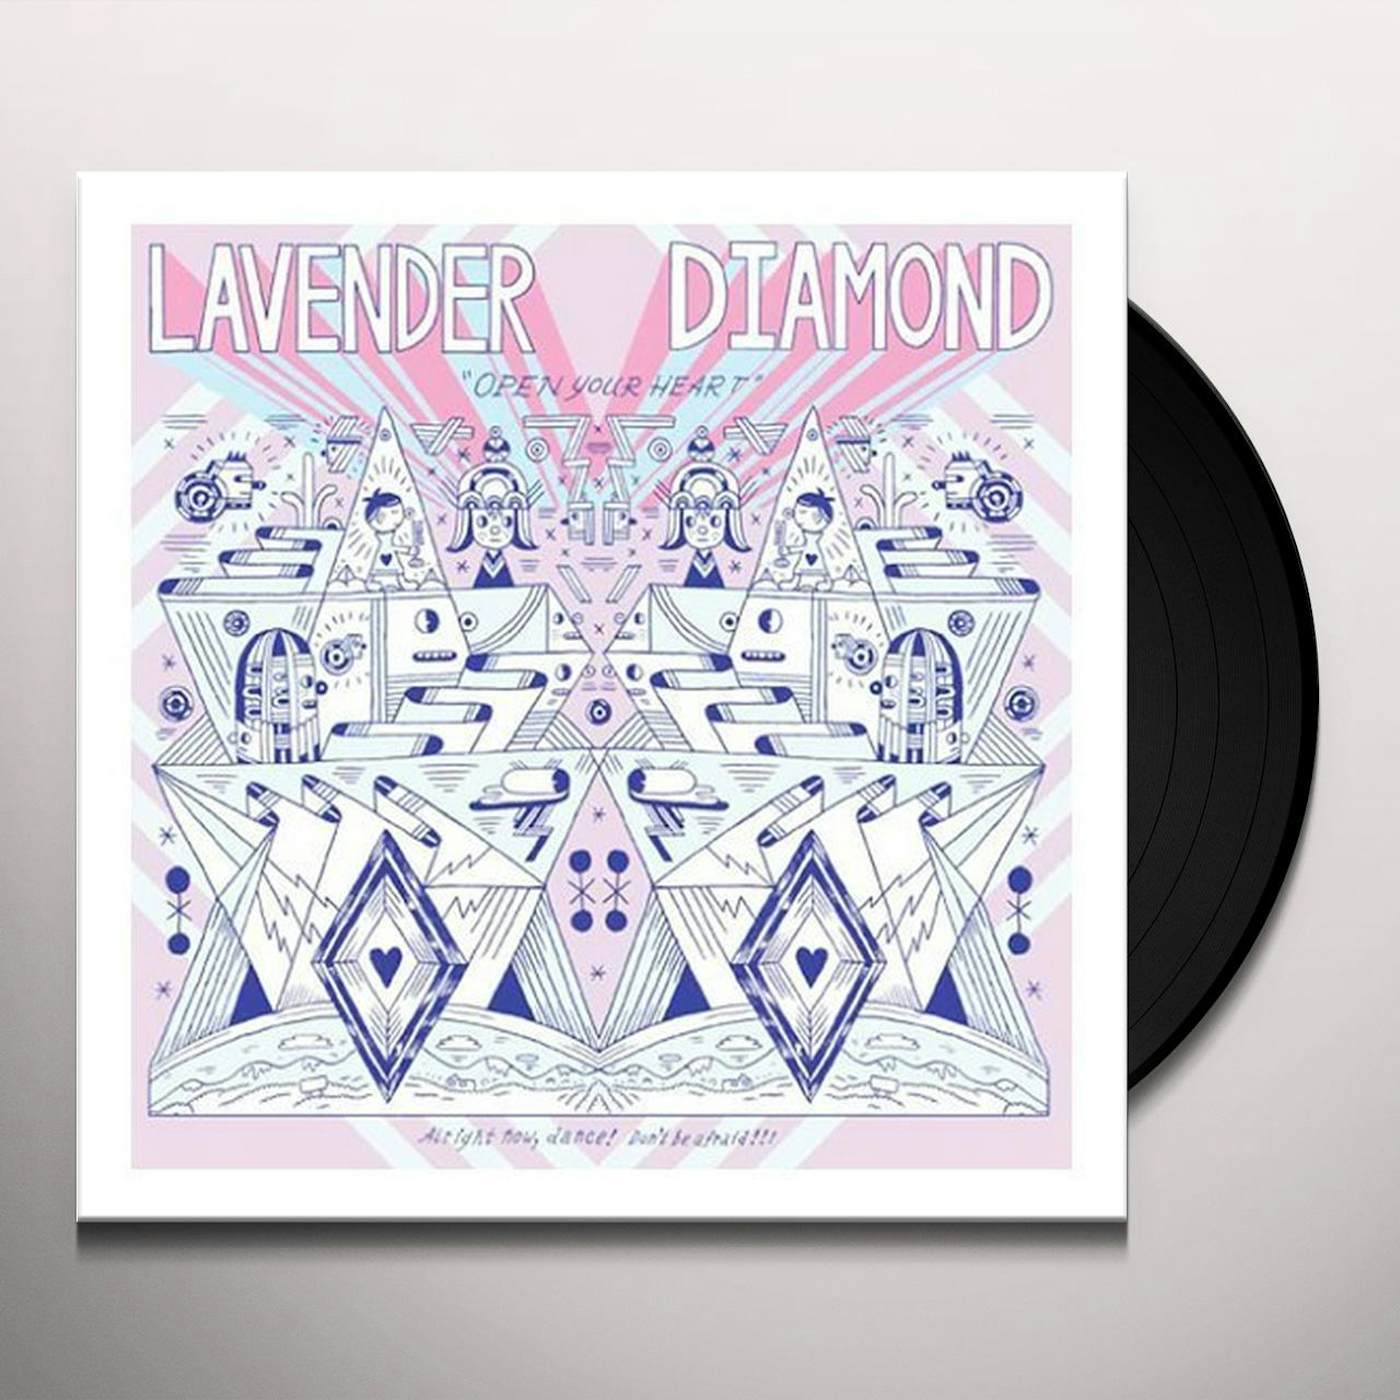 Lavender Diamond Open Your Heart Vinyl Record